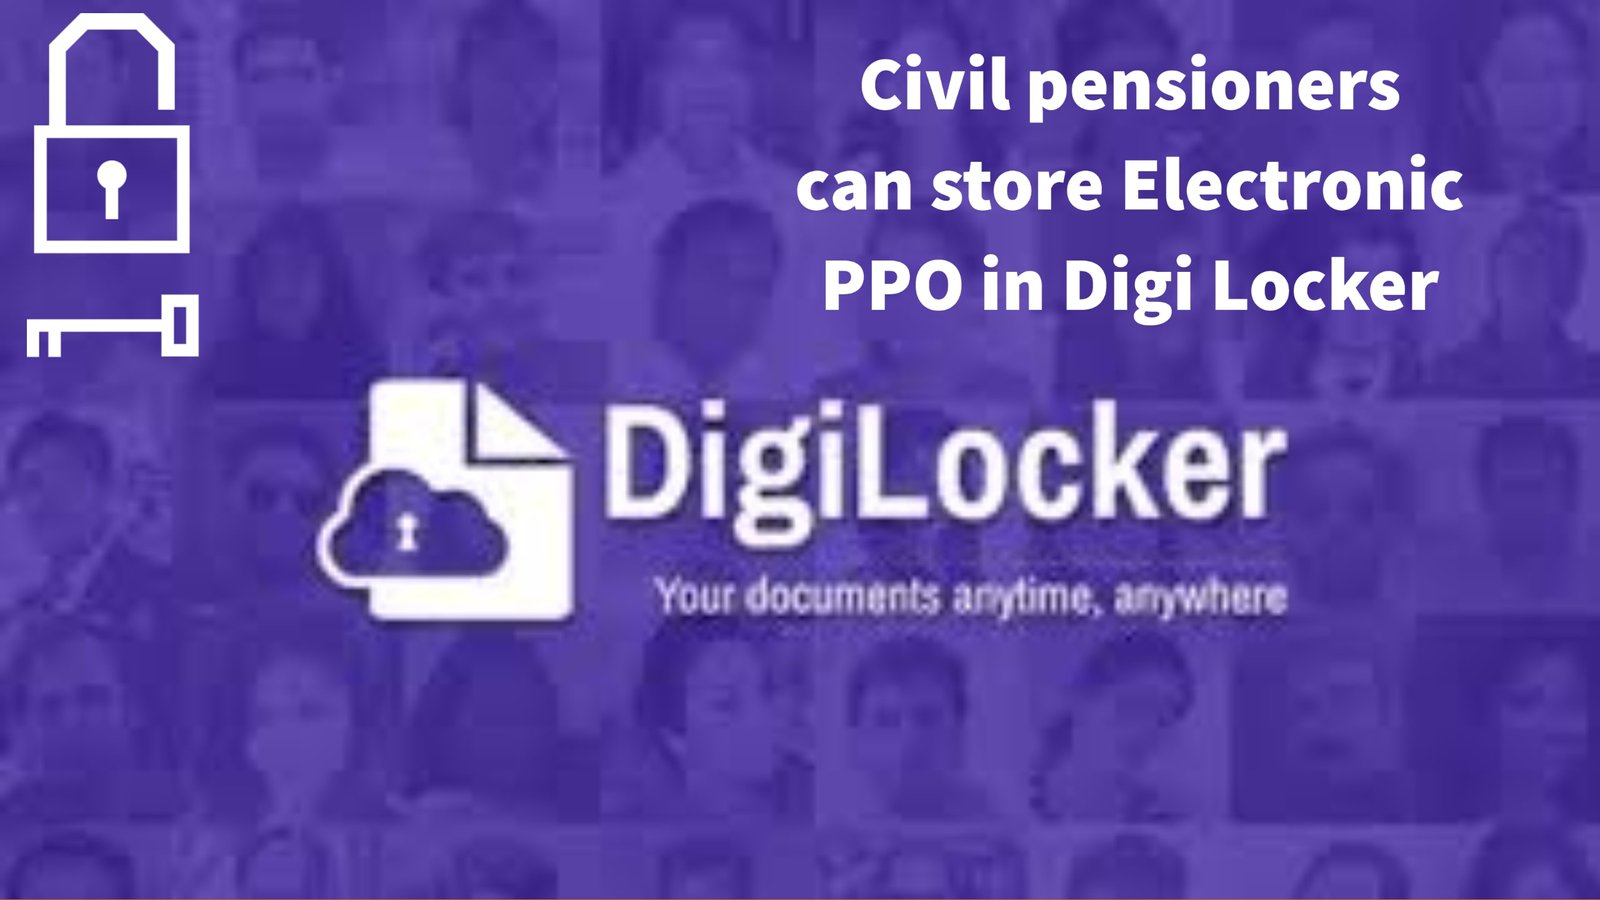 Civil pensioners can store Electronic PPO in Digi Locker